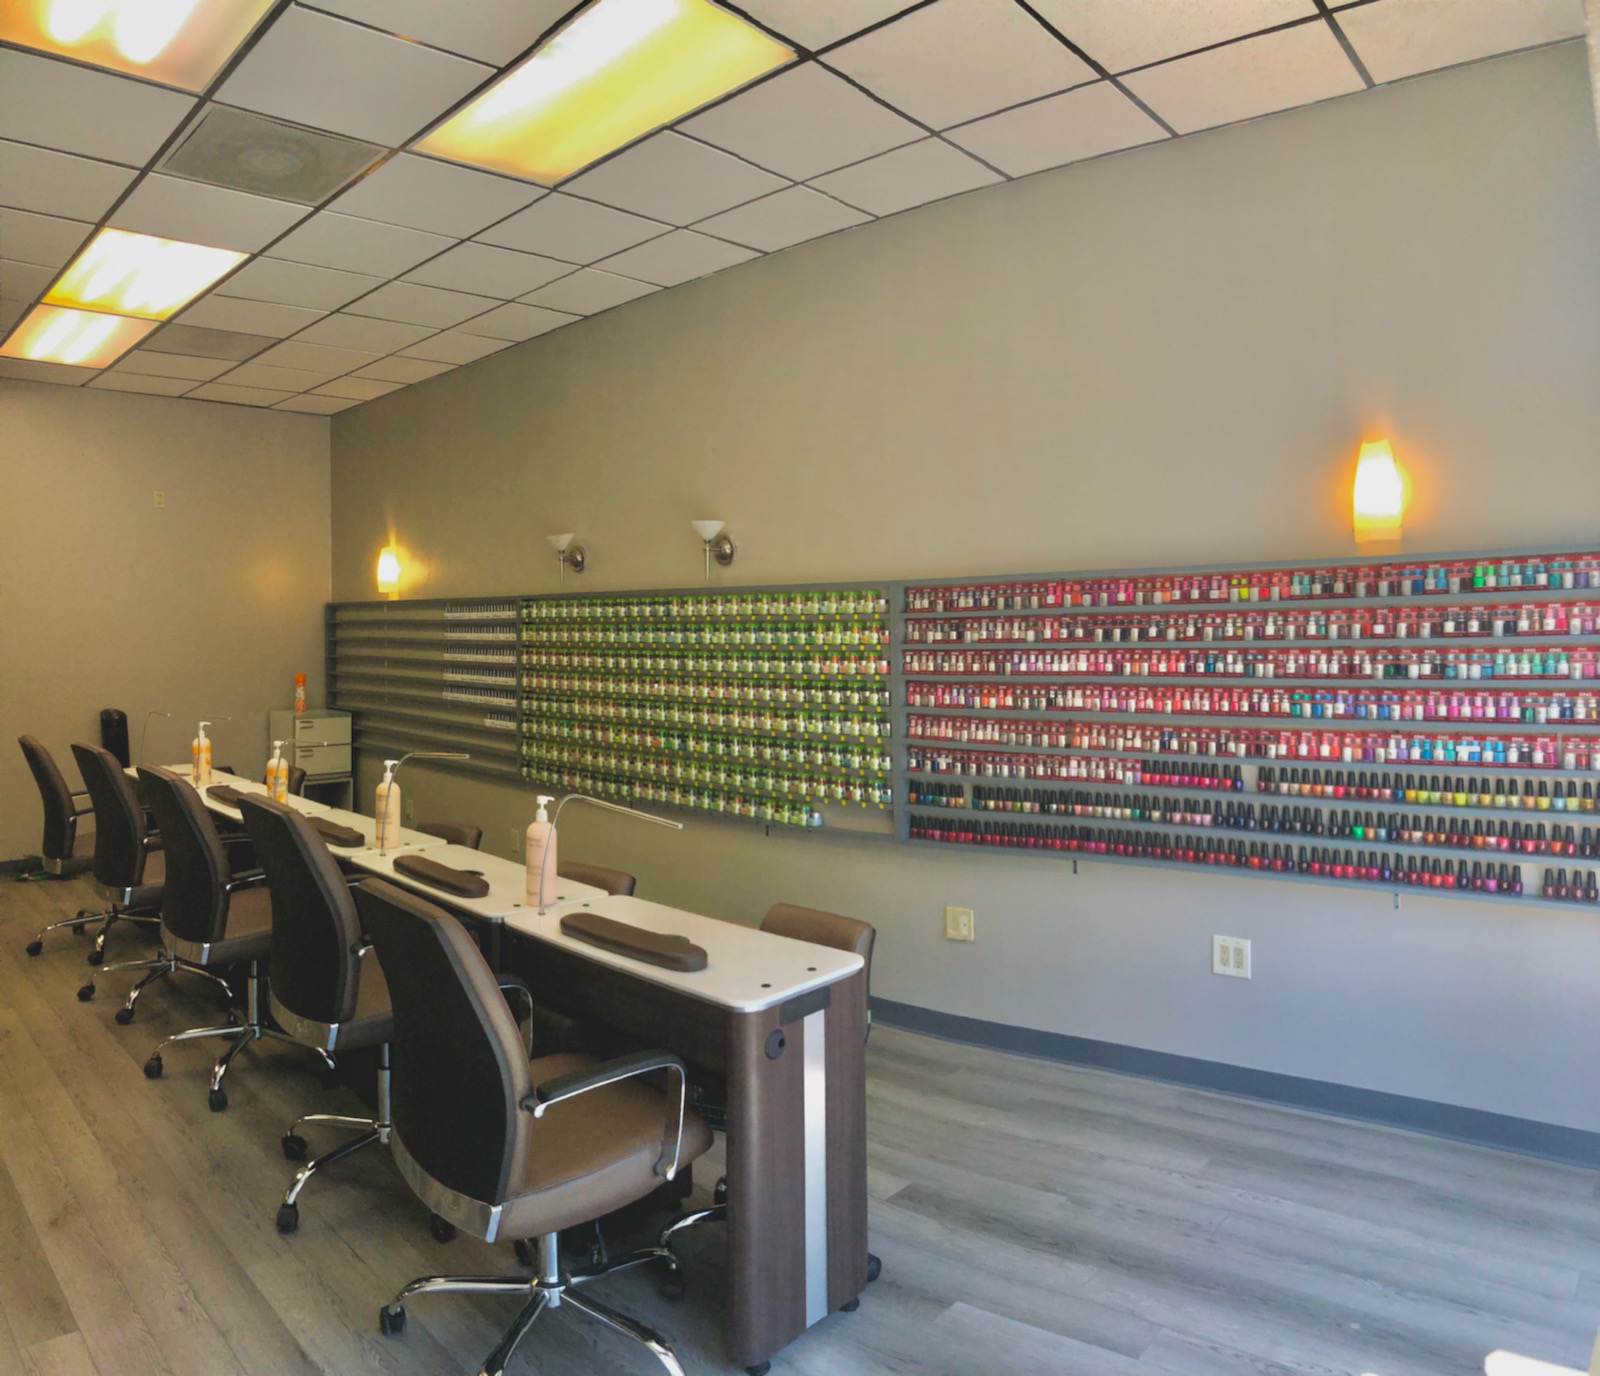 Fusion Nails & Beauty Spa - Nail salon in Petaluma CA 94954